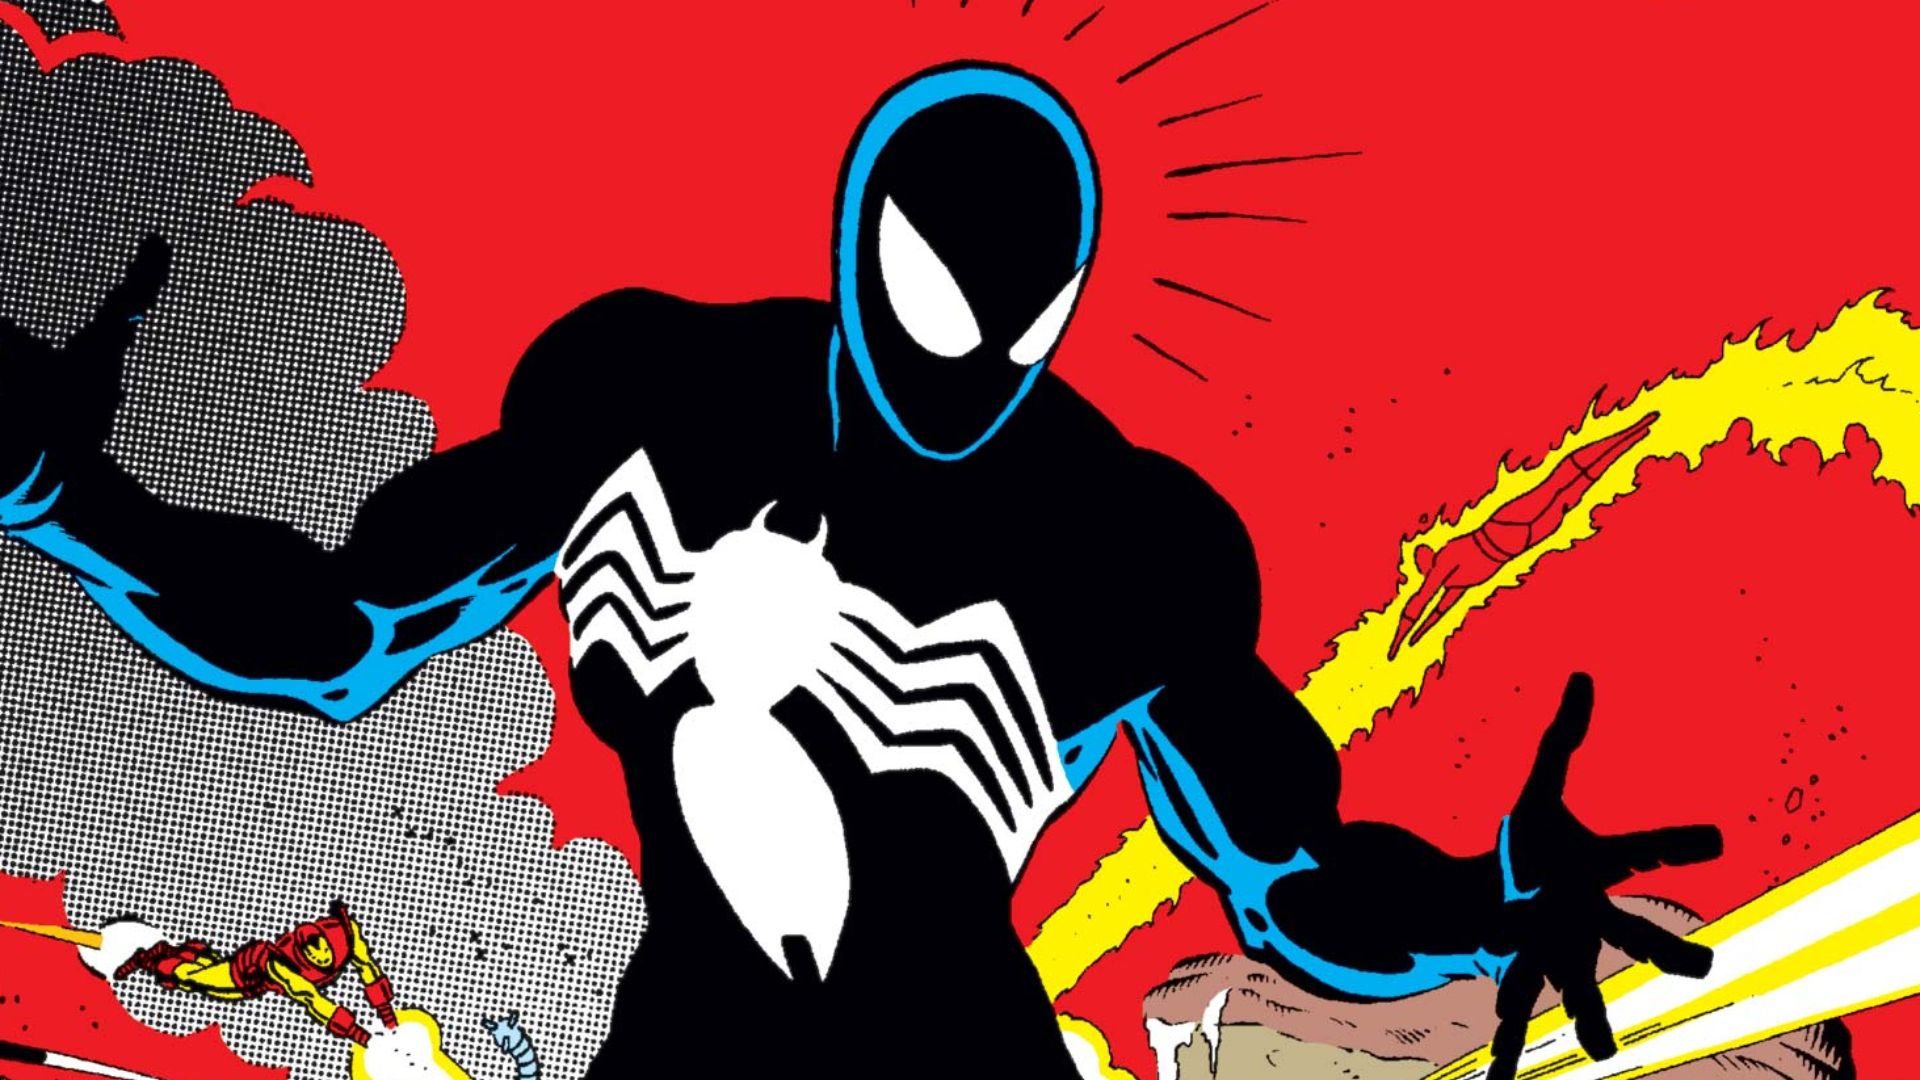 Marvel Comics Spider-Man Black Costume Wallpapers